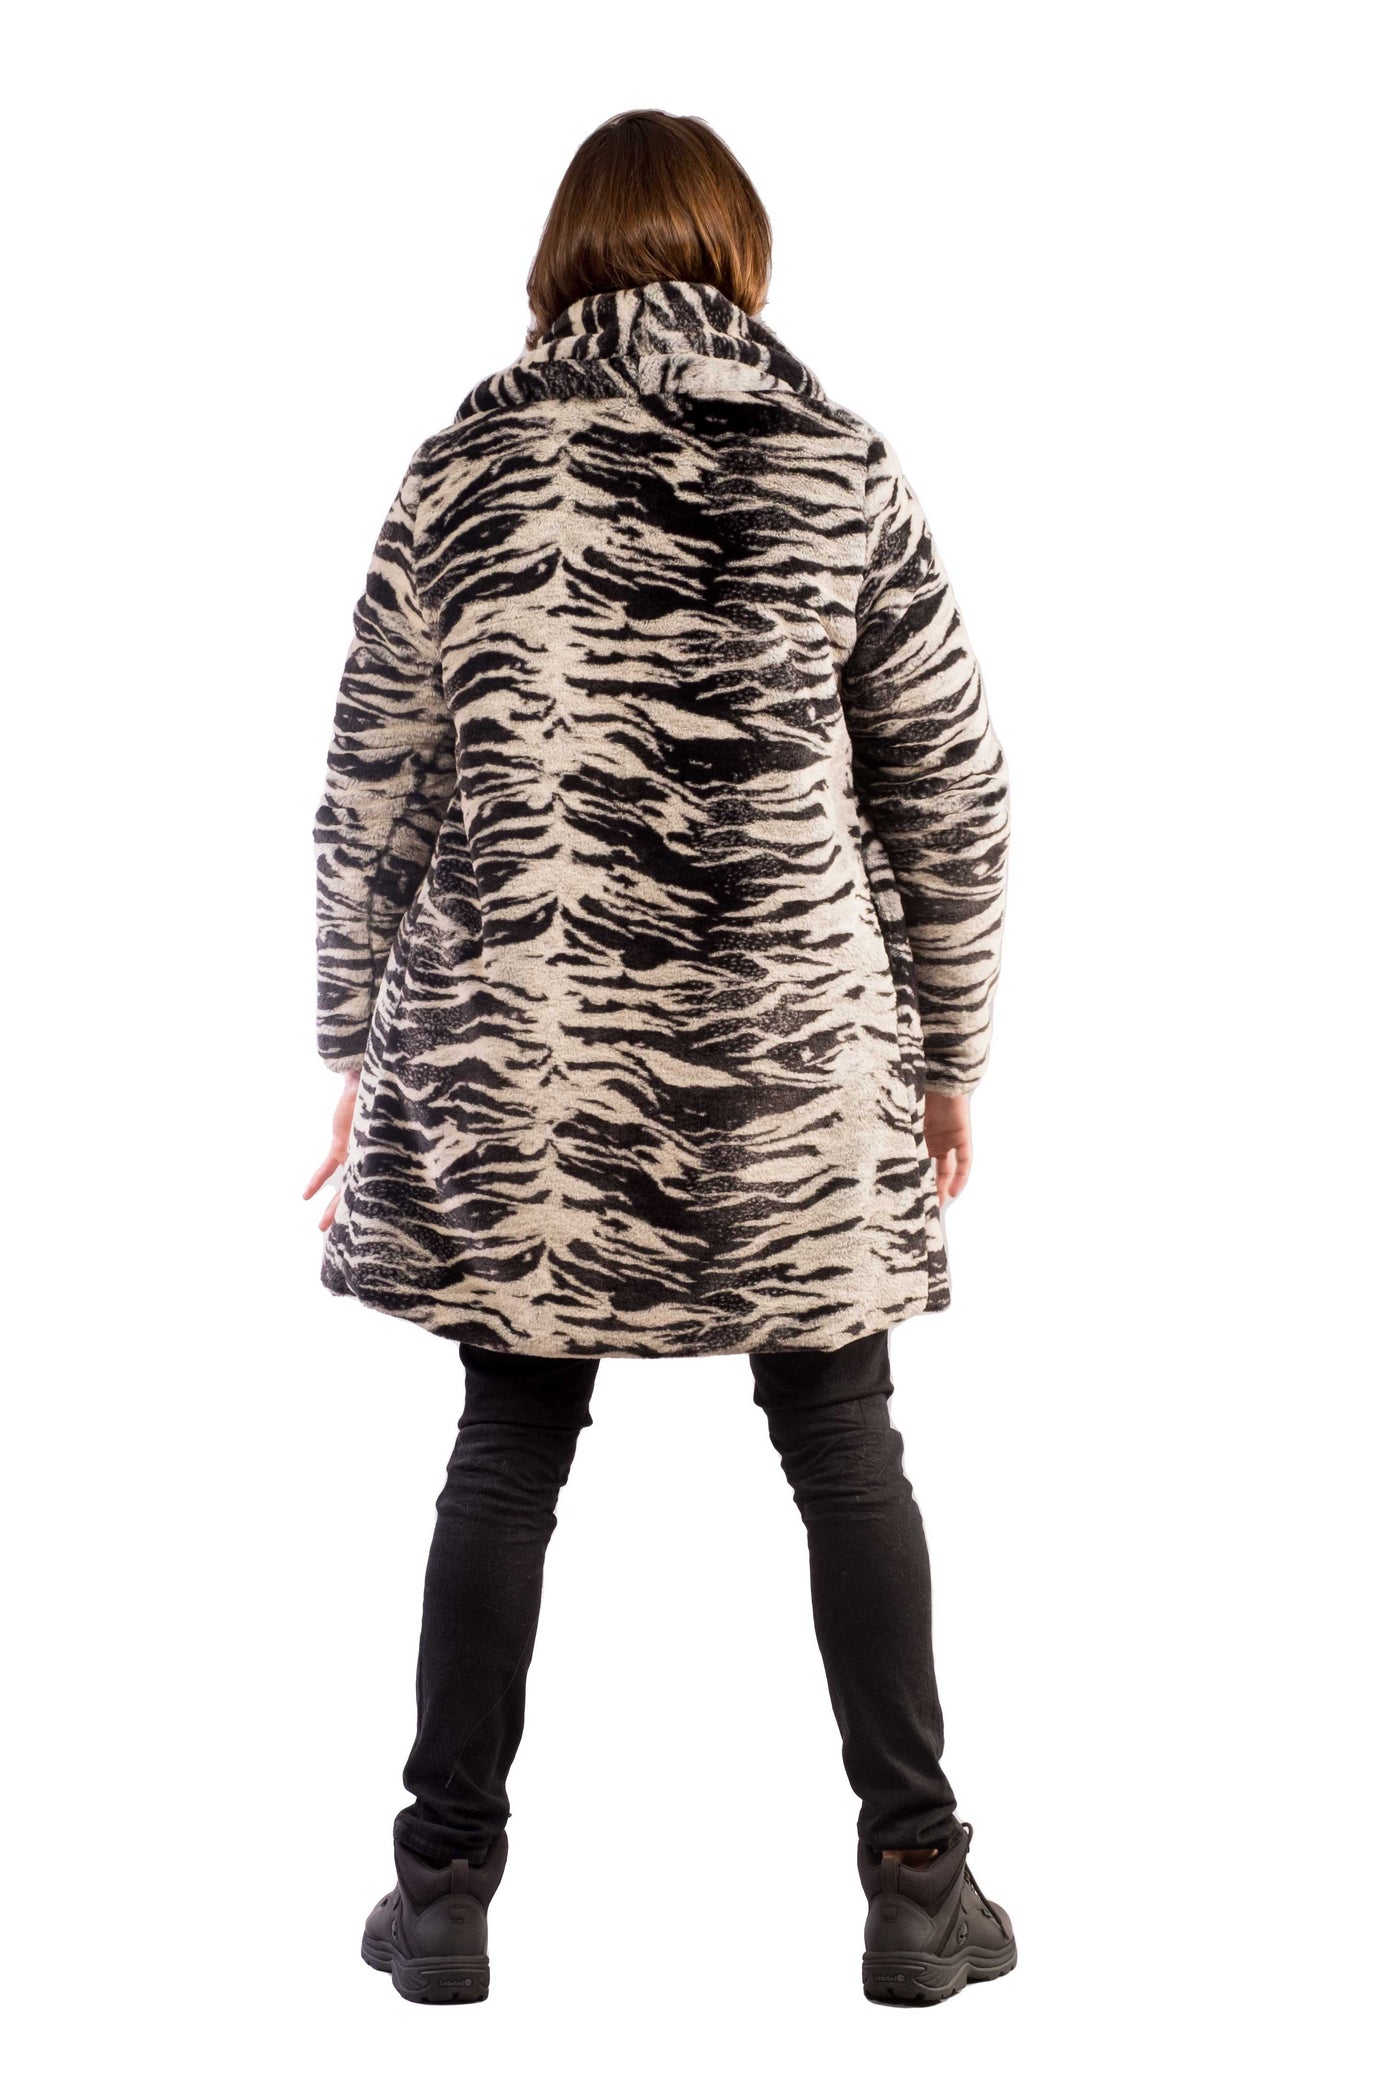 Men's Long Cozy Coat in "Natural Tiger"